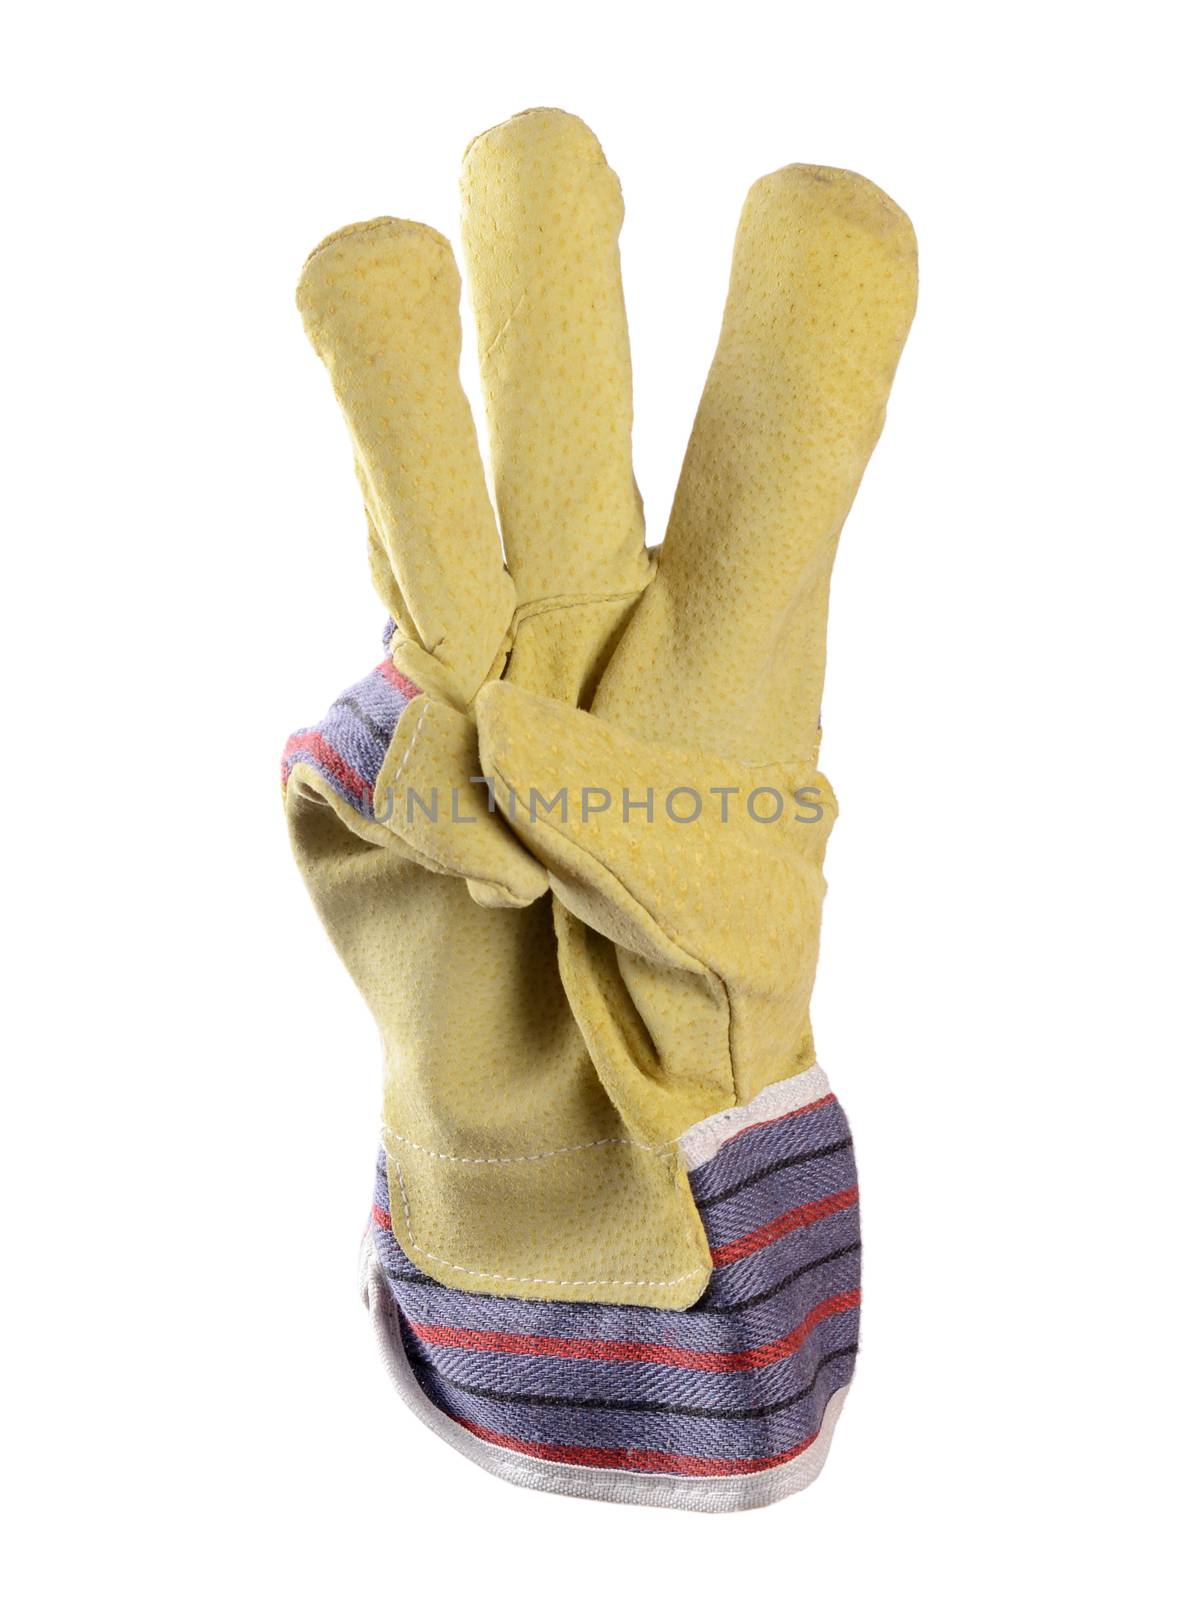 Working mens gloves on white background by SvetaVo